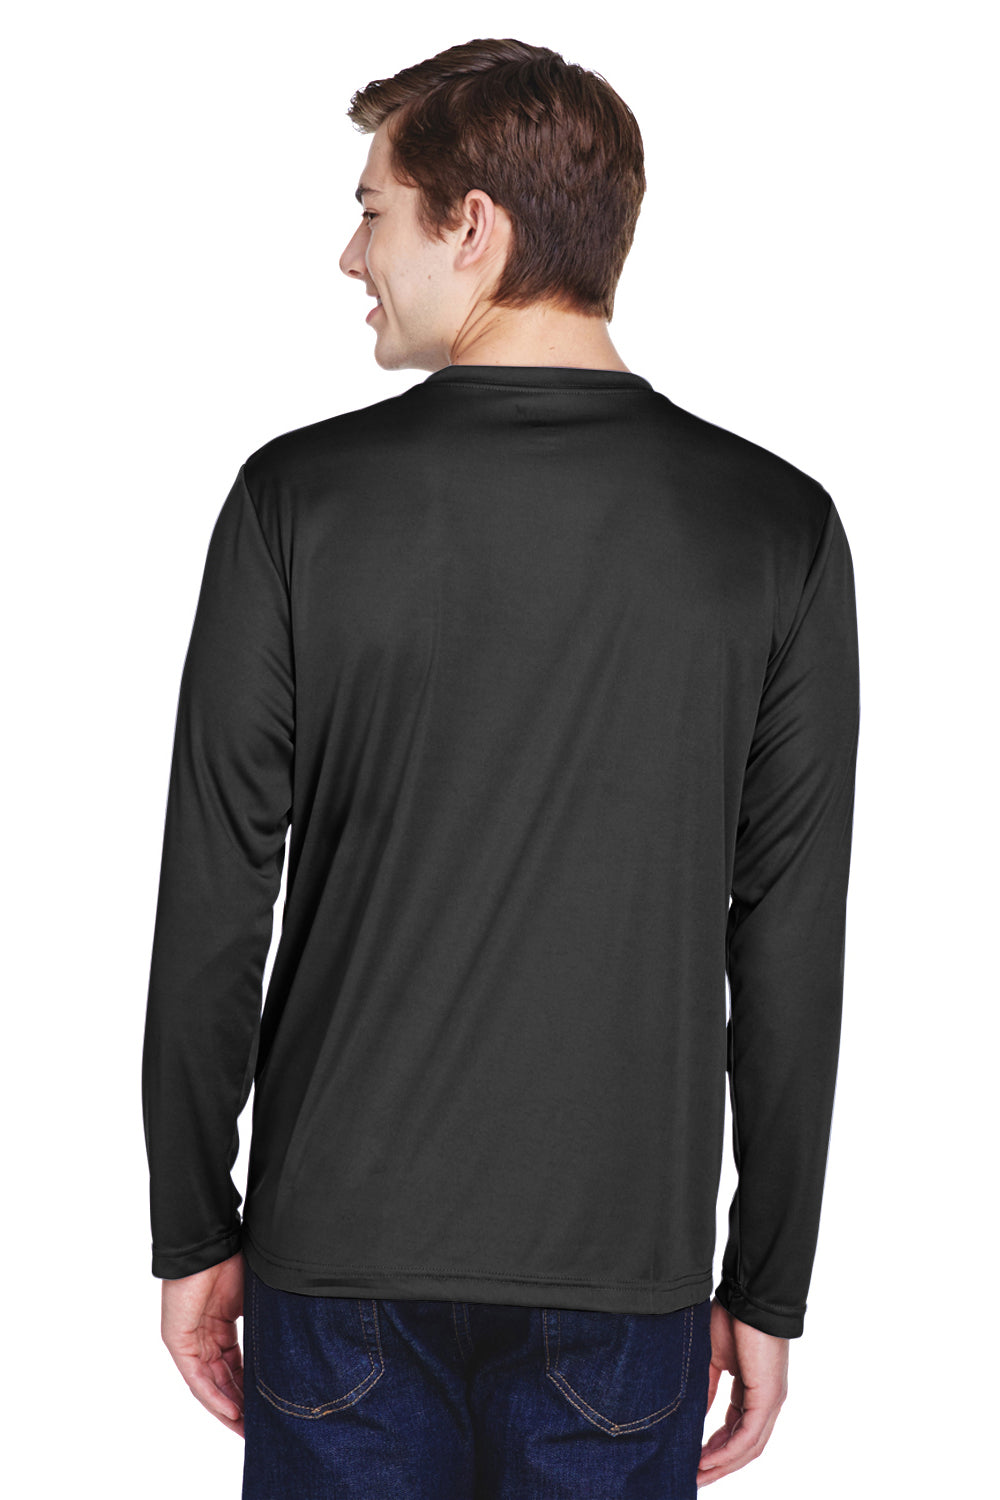 Team 365 TT11L Mens Zone Performance Moisture Wicking Long Sleeve Crewneck T-Shirt Black Back